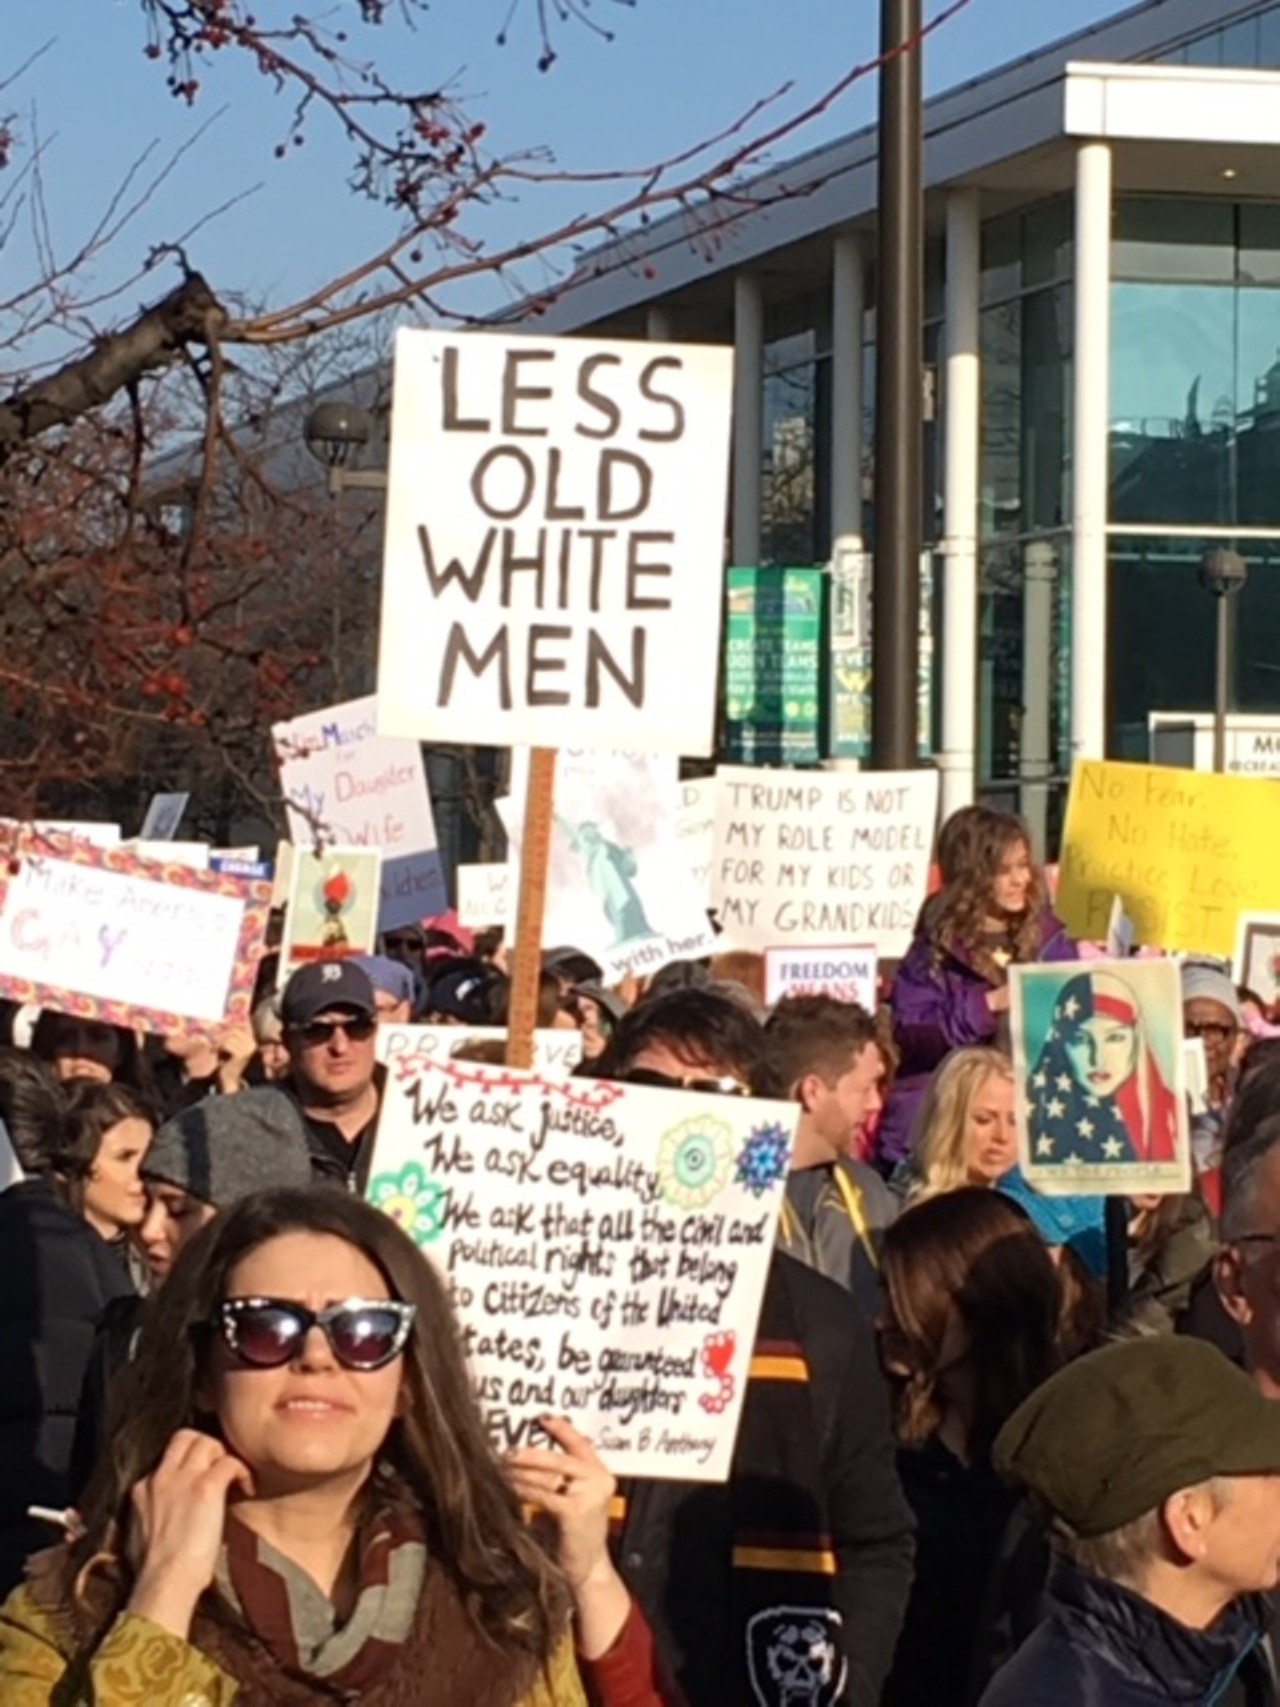 "Less Old White Men"
Photo by Alex Fluegel